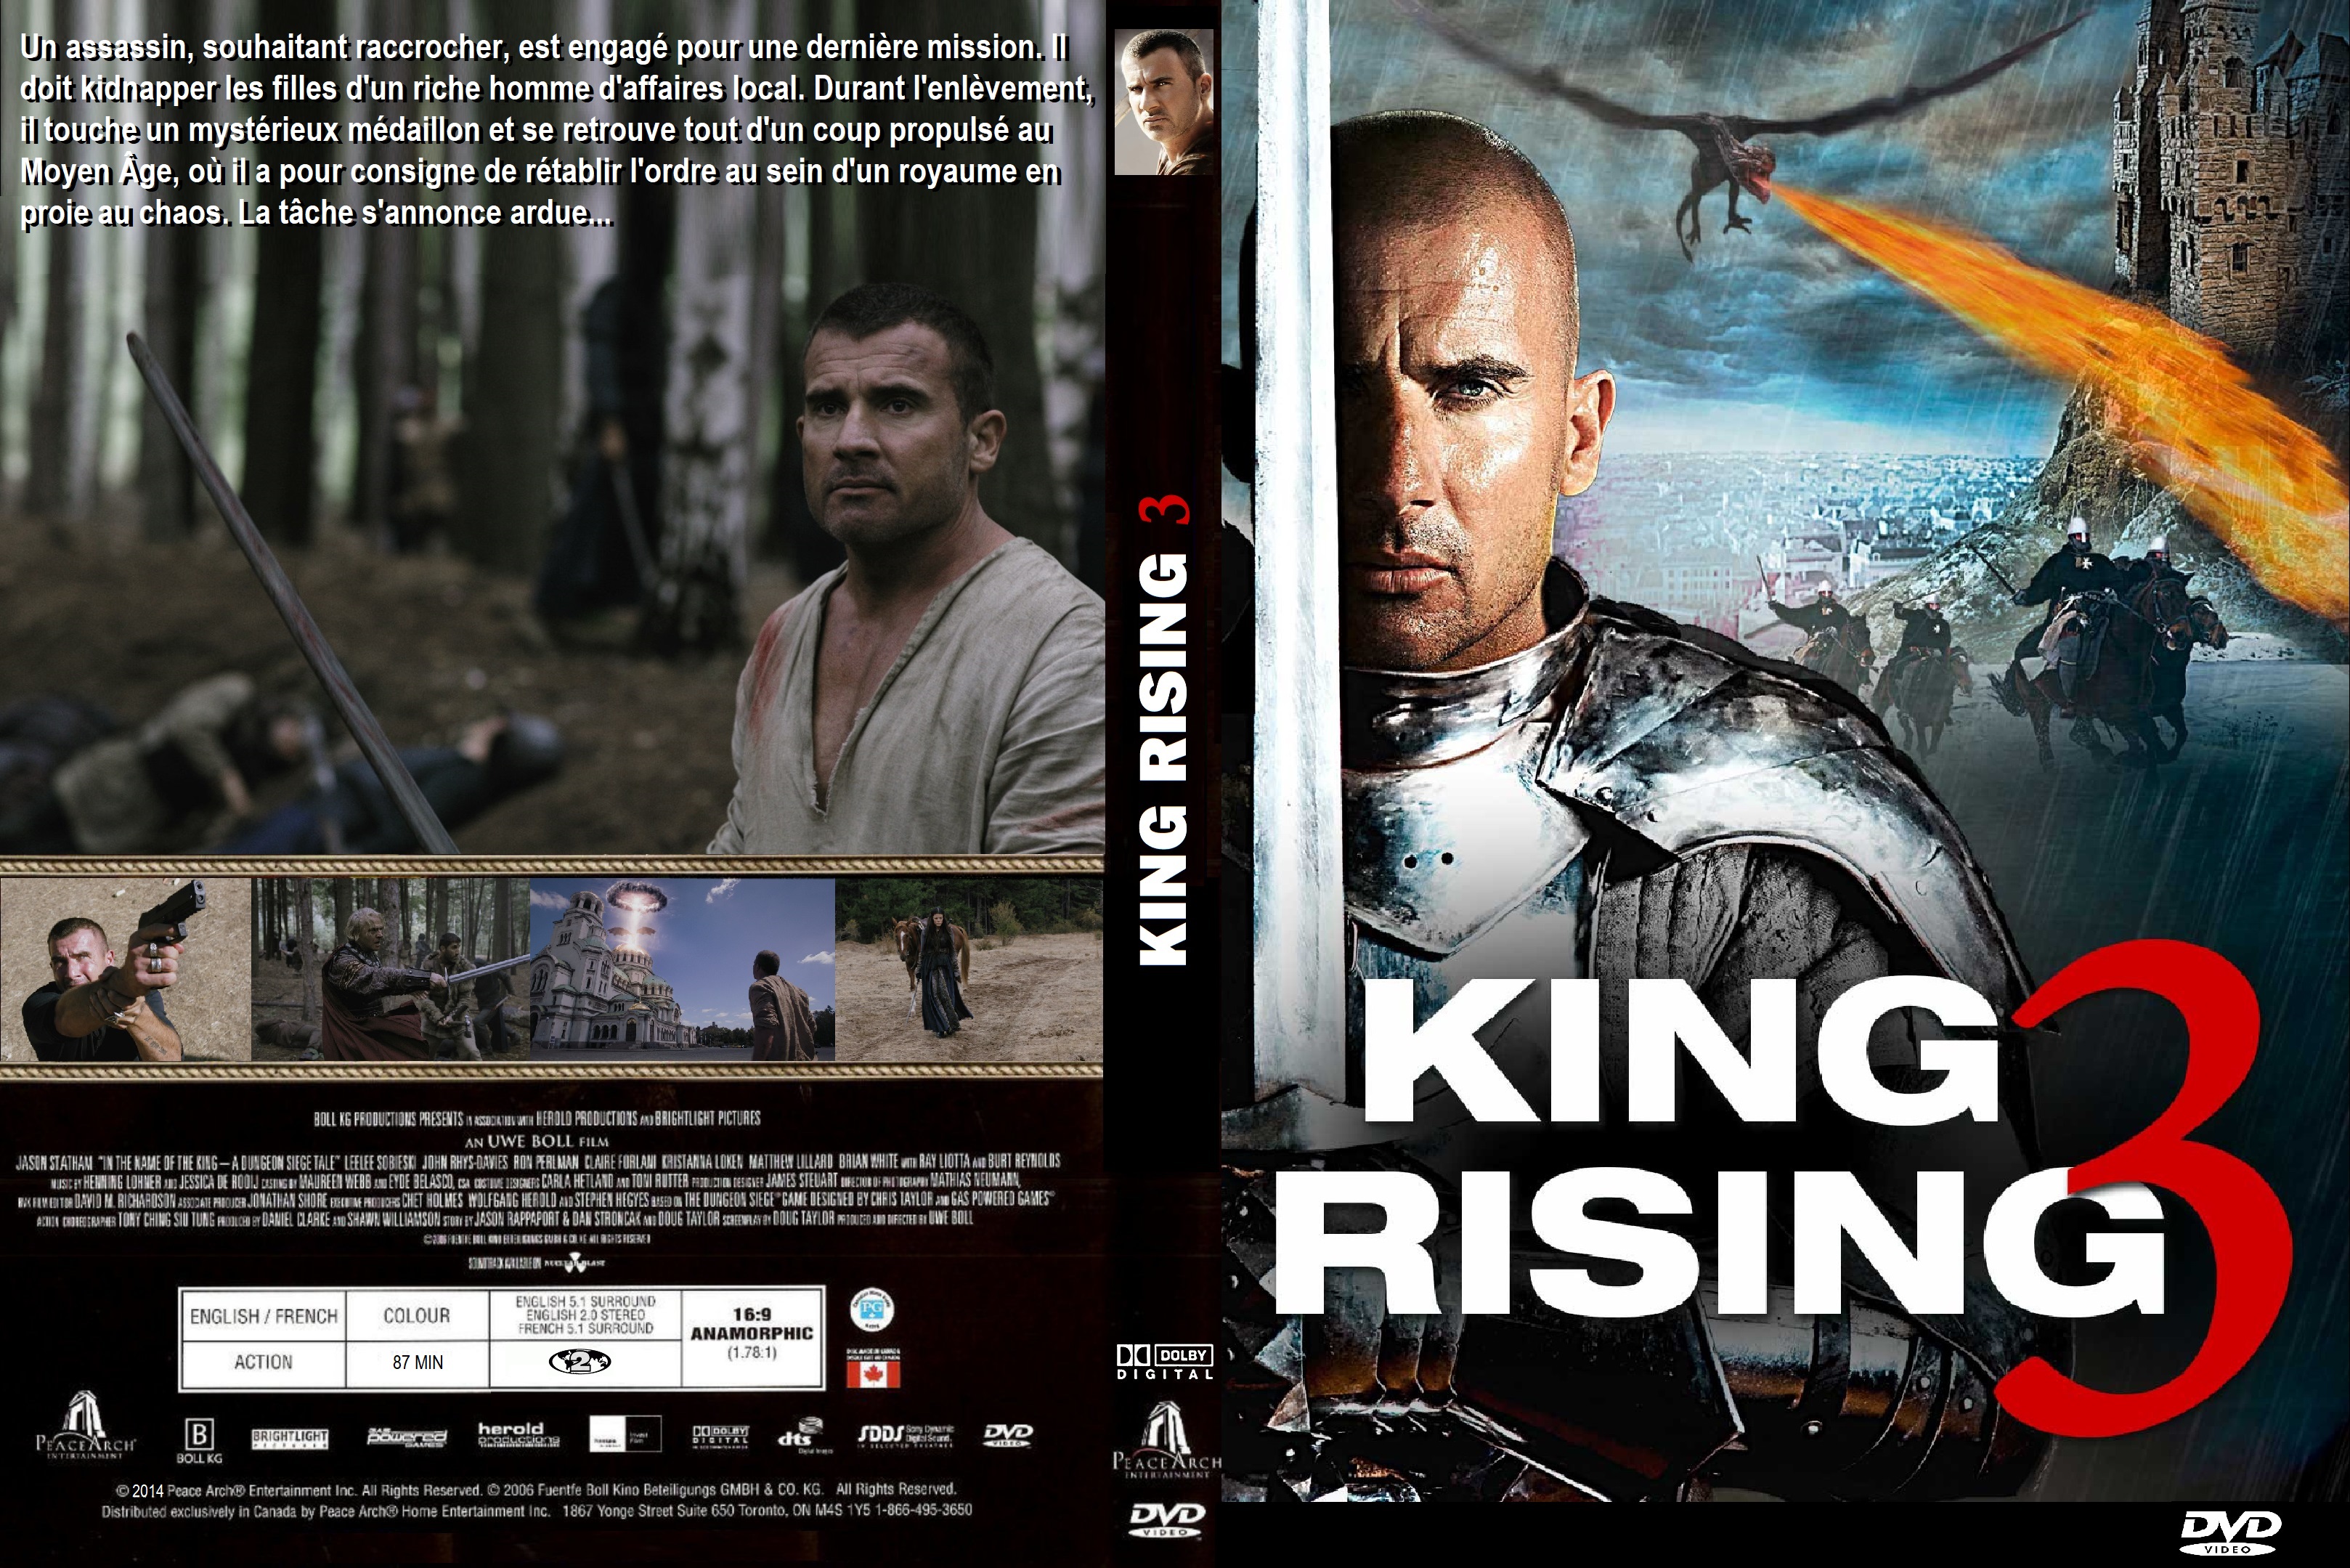 Jaquette DVD King Rising 3 custom